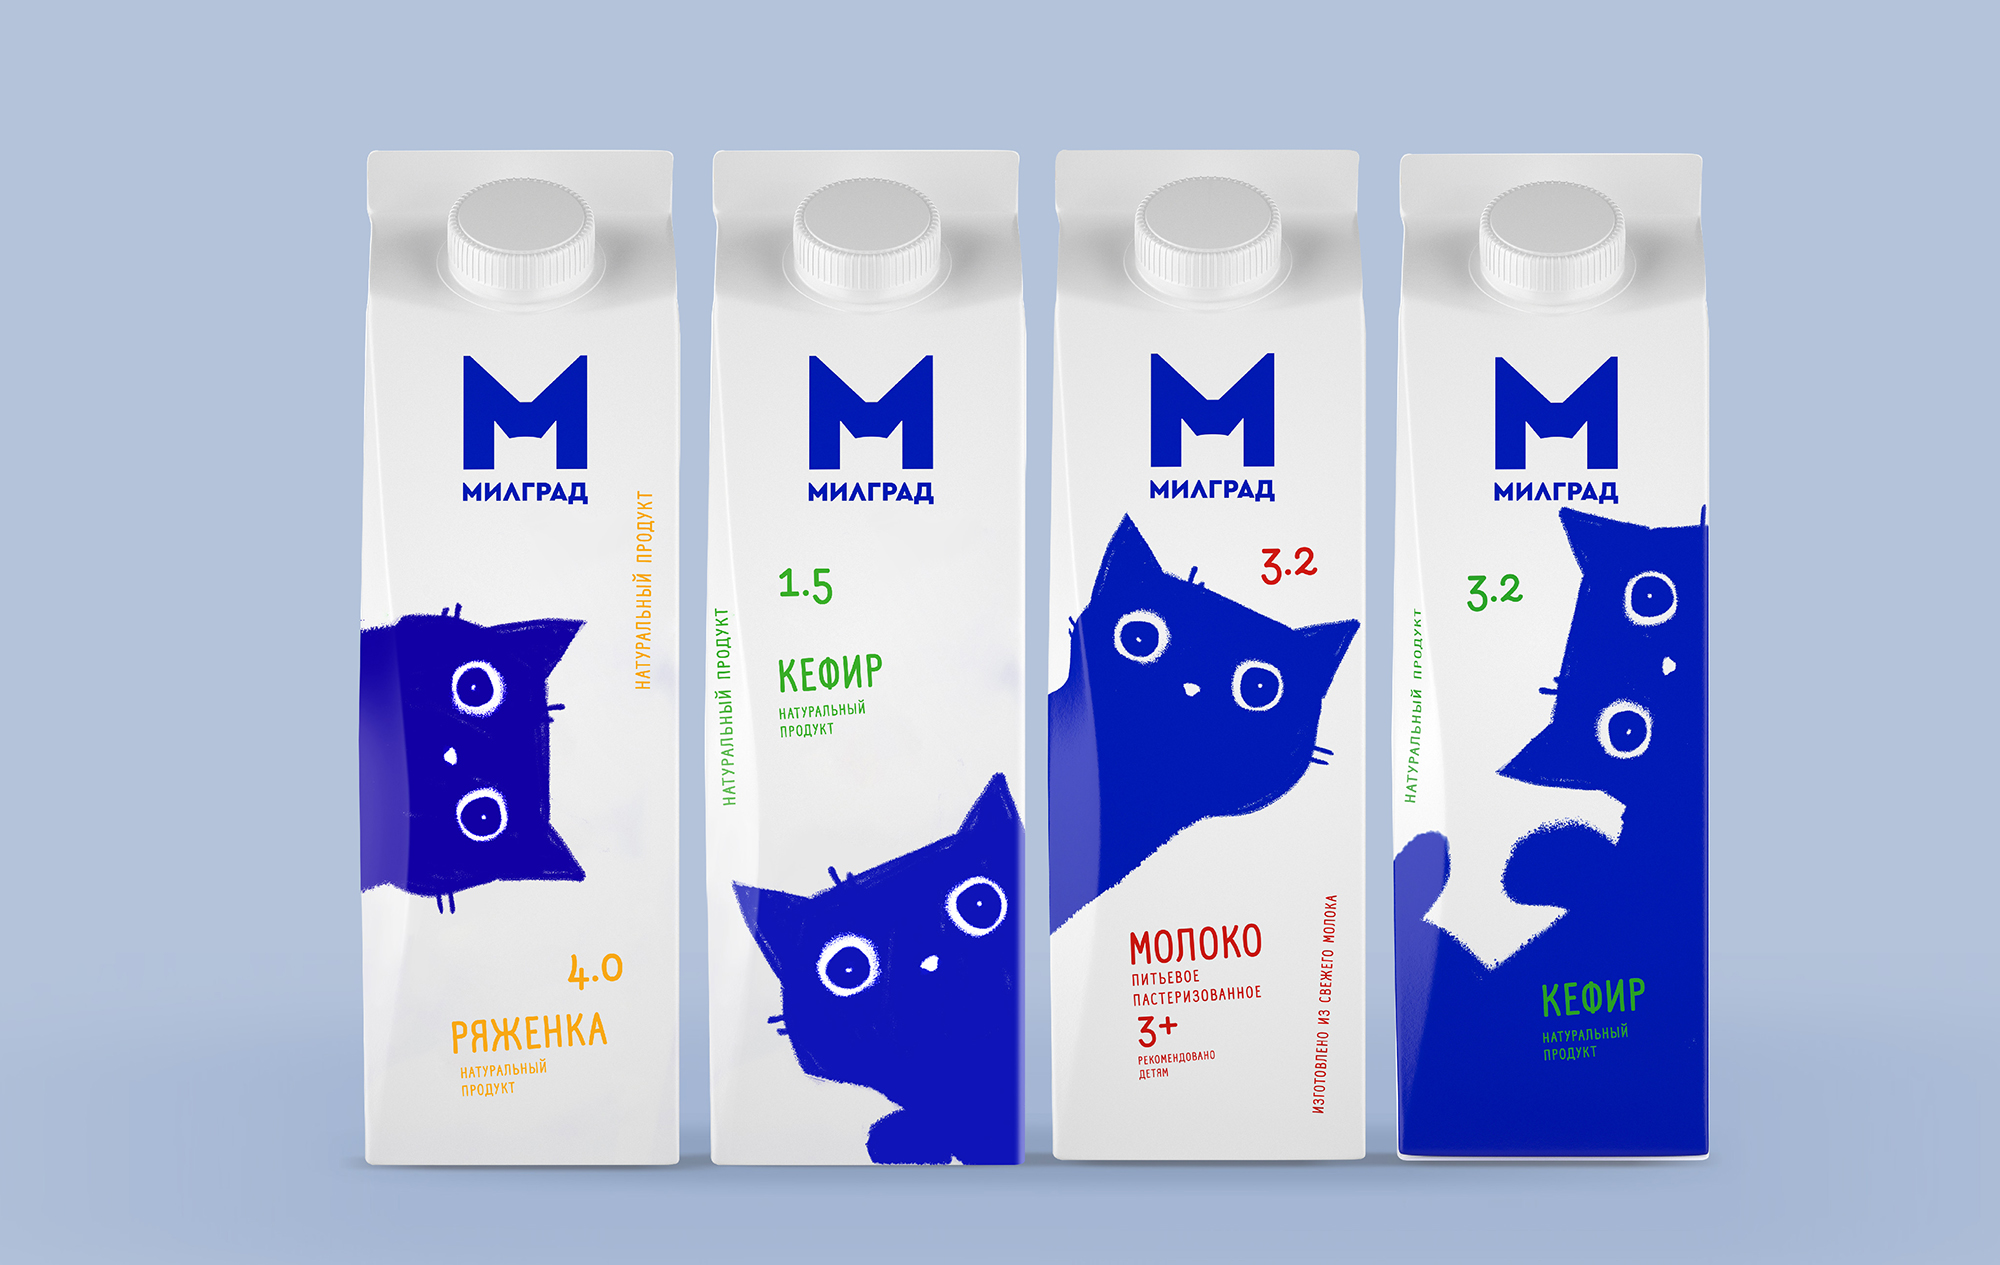 Milgrad Milk Is The Cat’s Meow